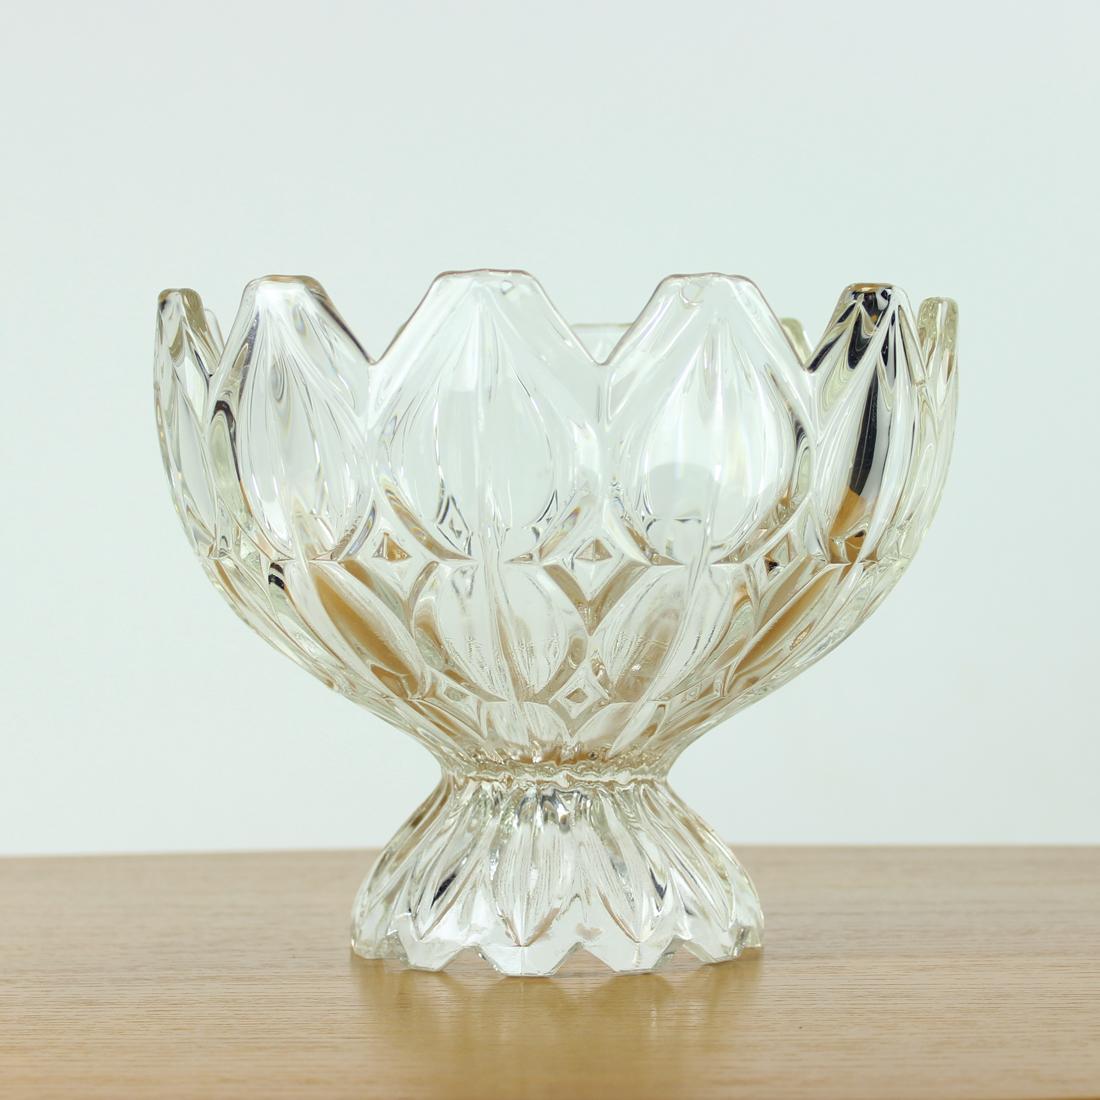 Unique Pressed Glass Bowl, Tulip Collection Hermanowa Hut, 1957 For Sale 1